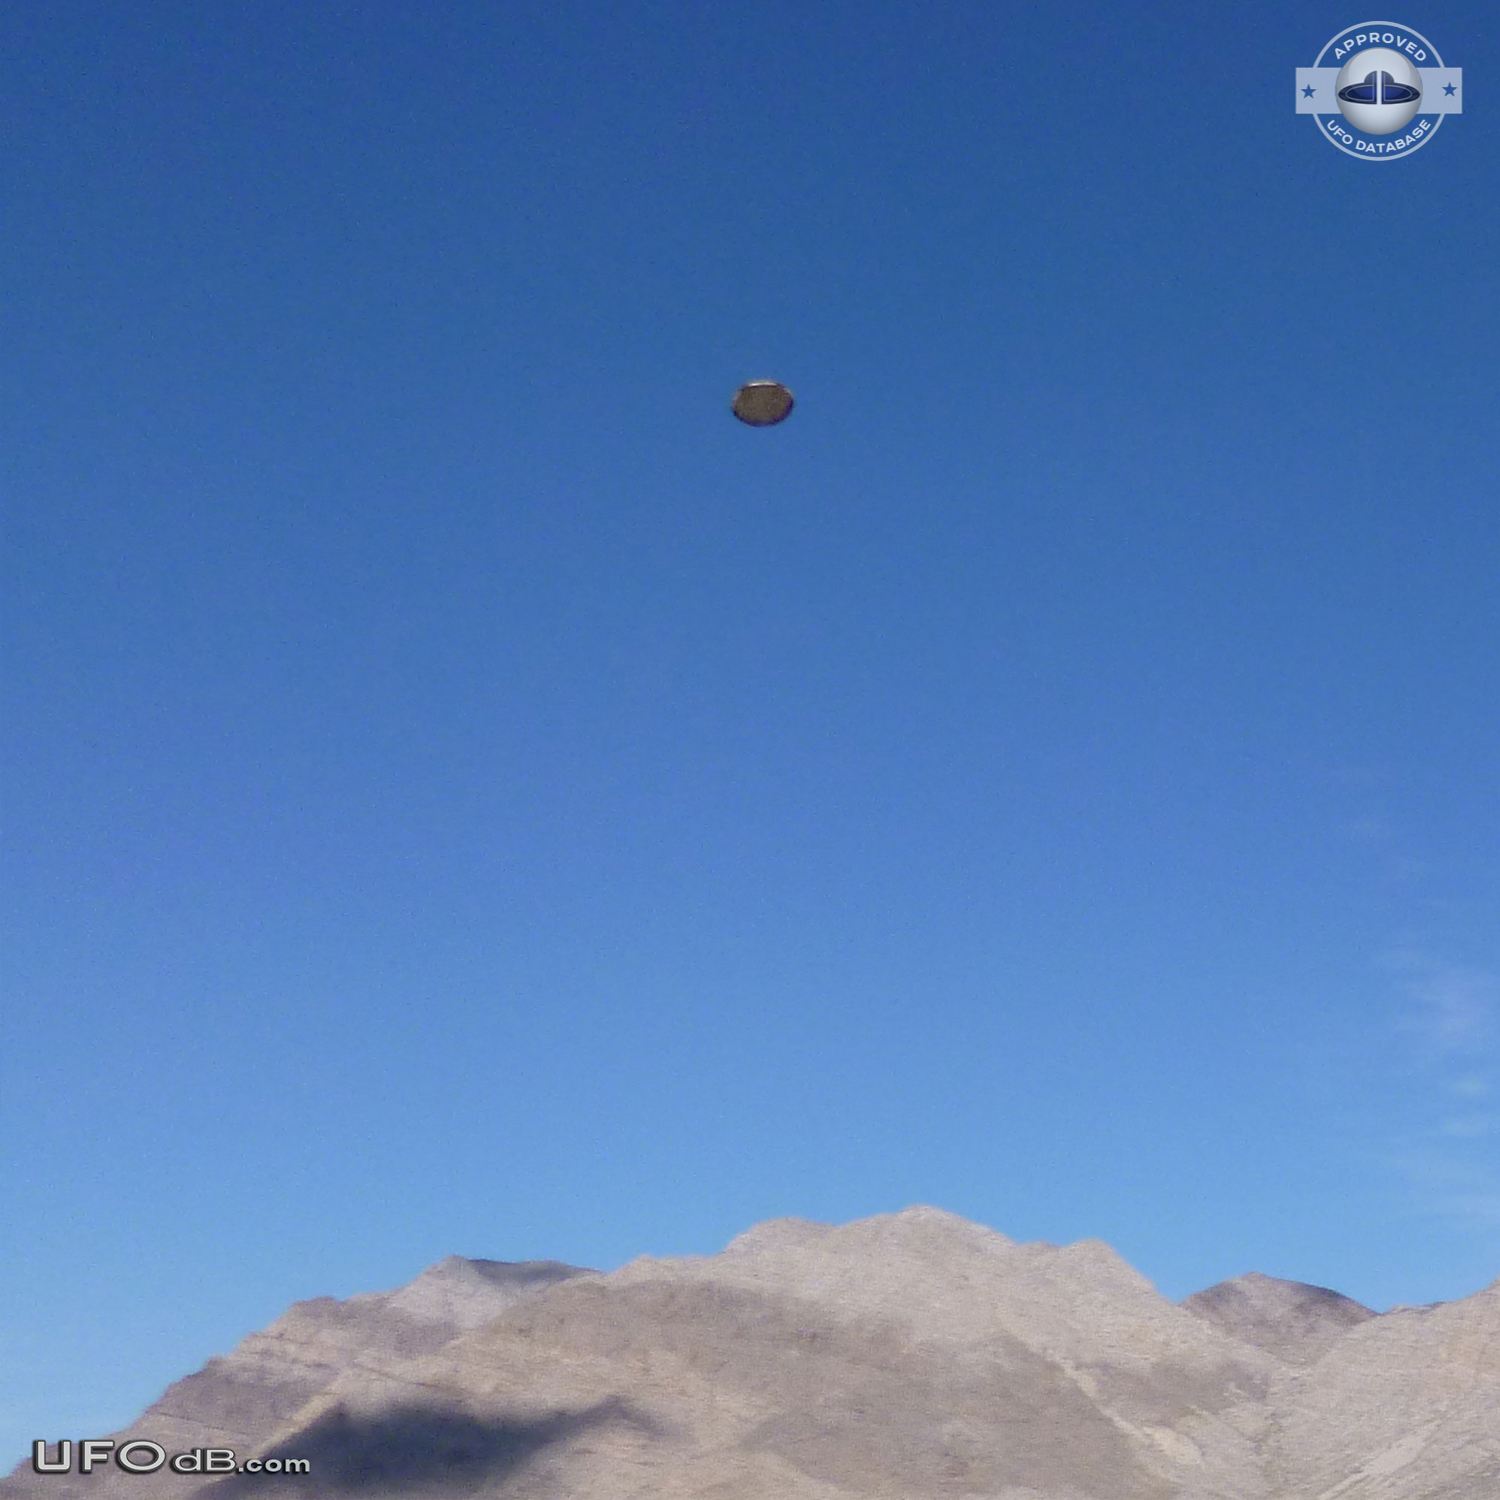 UFO saucer seen near Area 51 Black Mailbox near Rachel Nevada 2012 UFO Picture #526-2